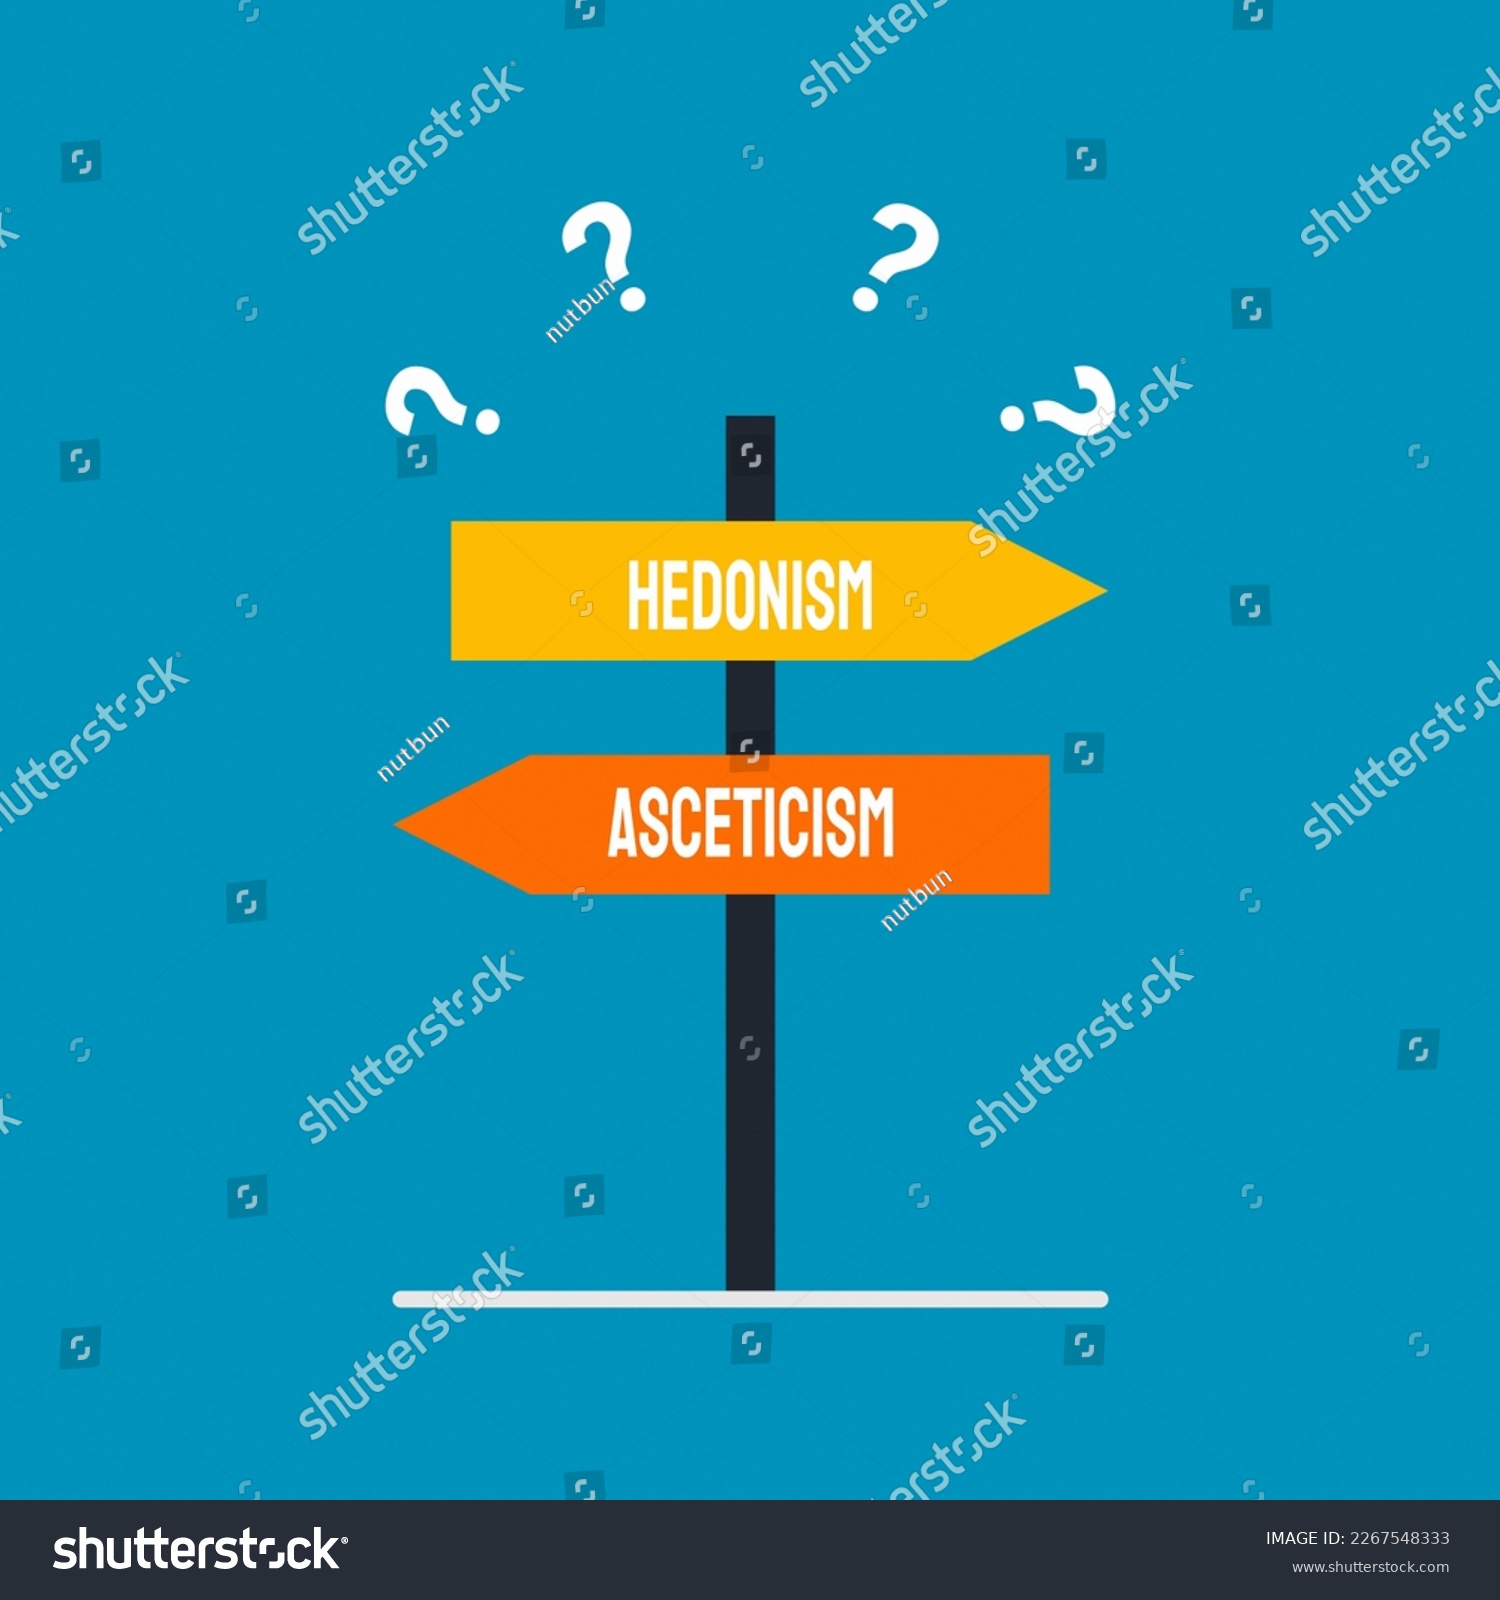 SVG of Hedonism vs Asceticism - 